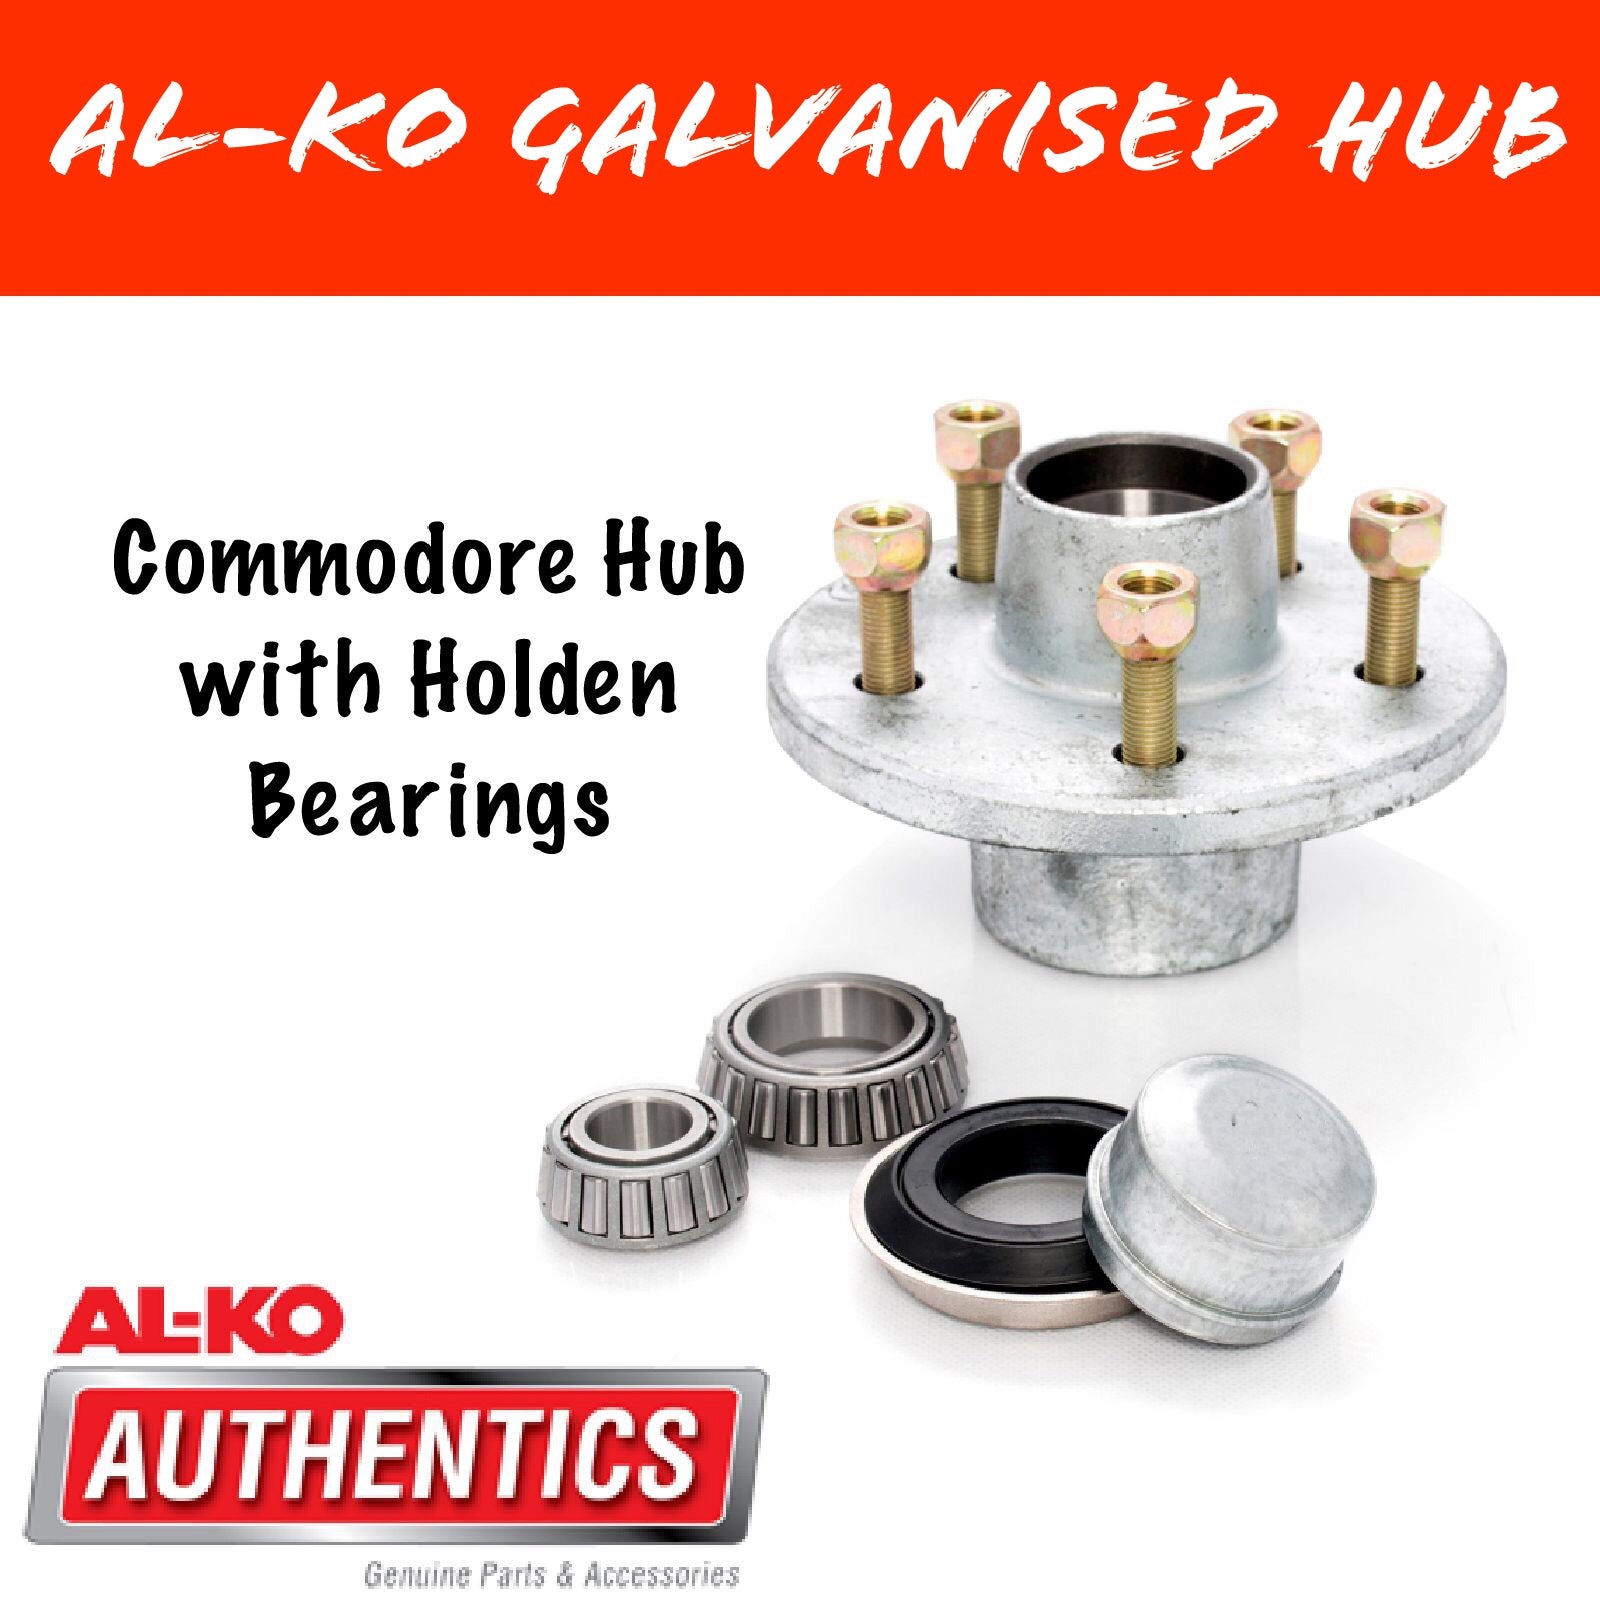 AL-KO Commodore Gal Hub with Holden Bearings